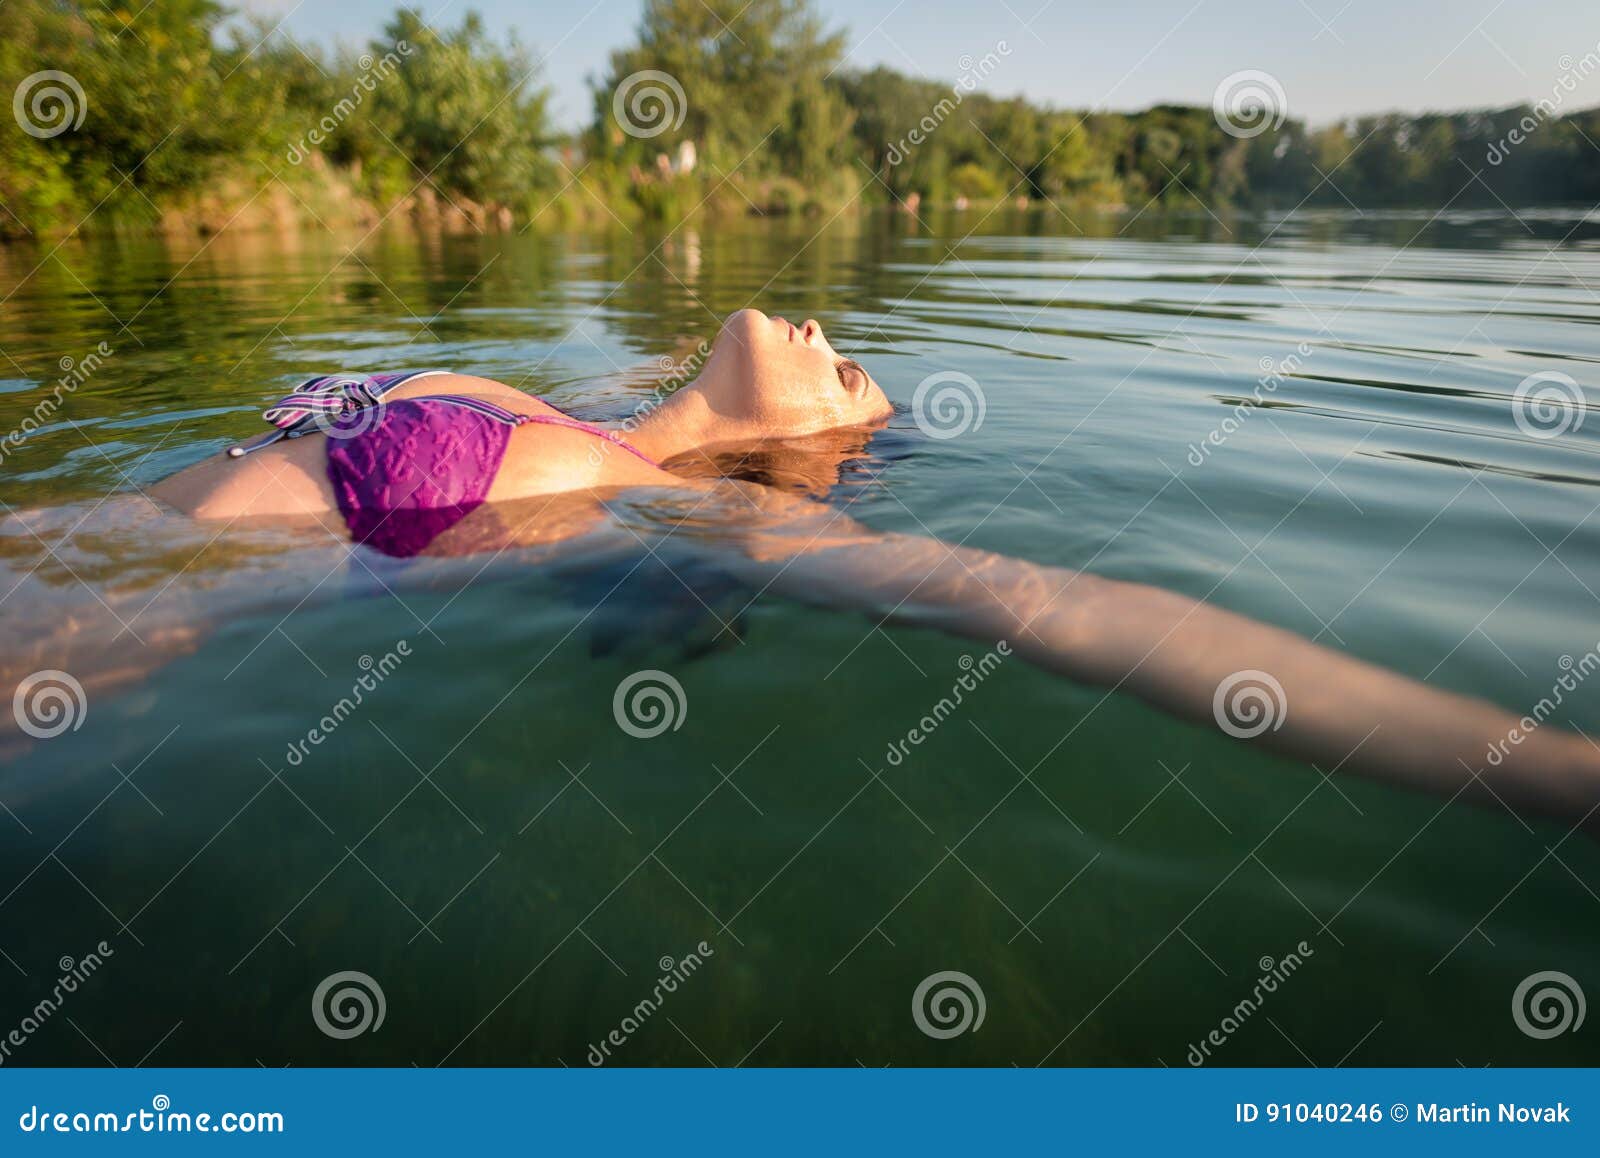 Она плавала в озере. Женщина плавает в озере. Плаванье озеро девушка. Озеро девушка по середине. Озеро бикини.